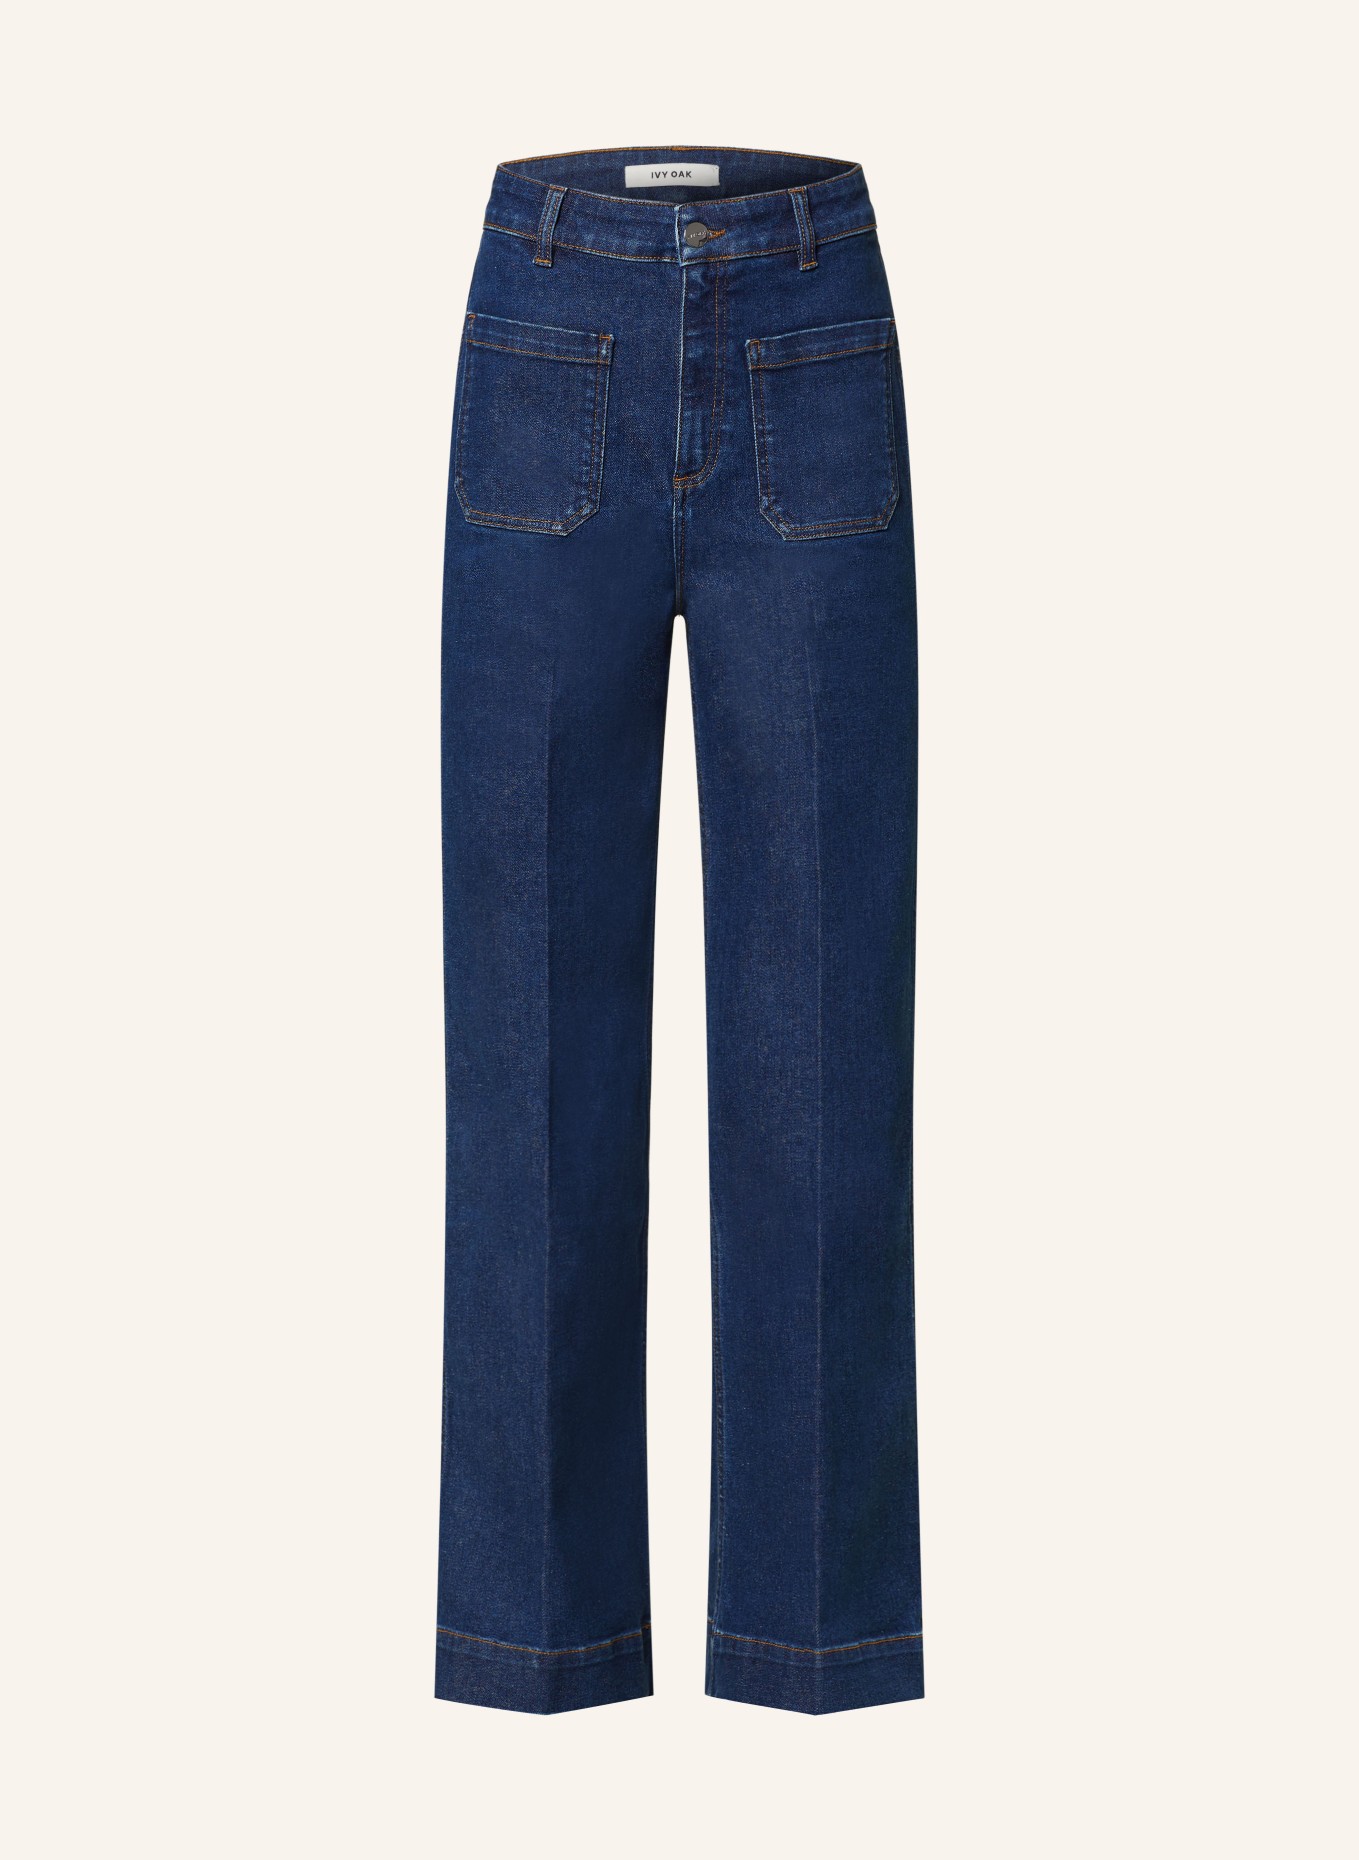 IVY OAK Flared Jeans POLLIANA, Farbe: BL871 Indigo Denim (Bild 1)